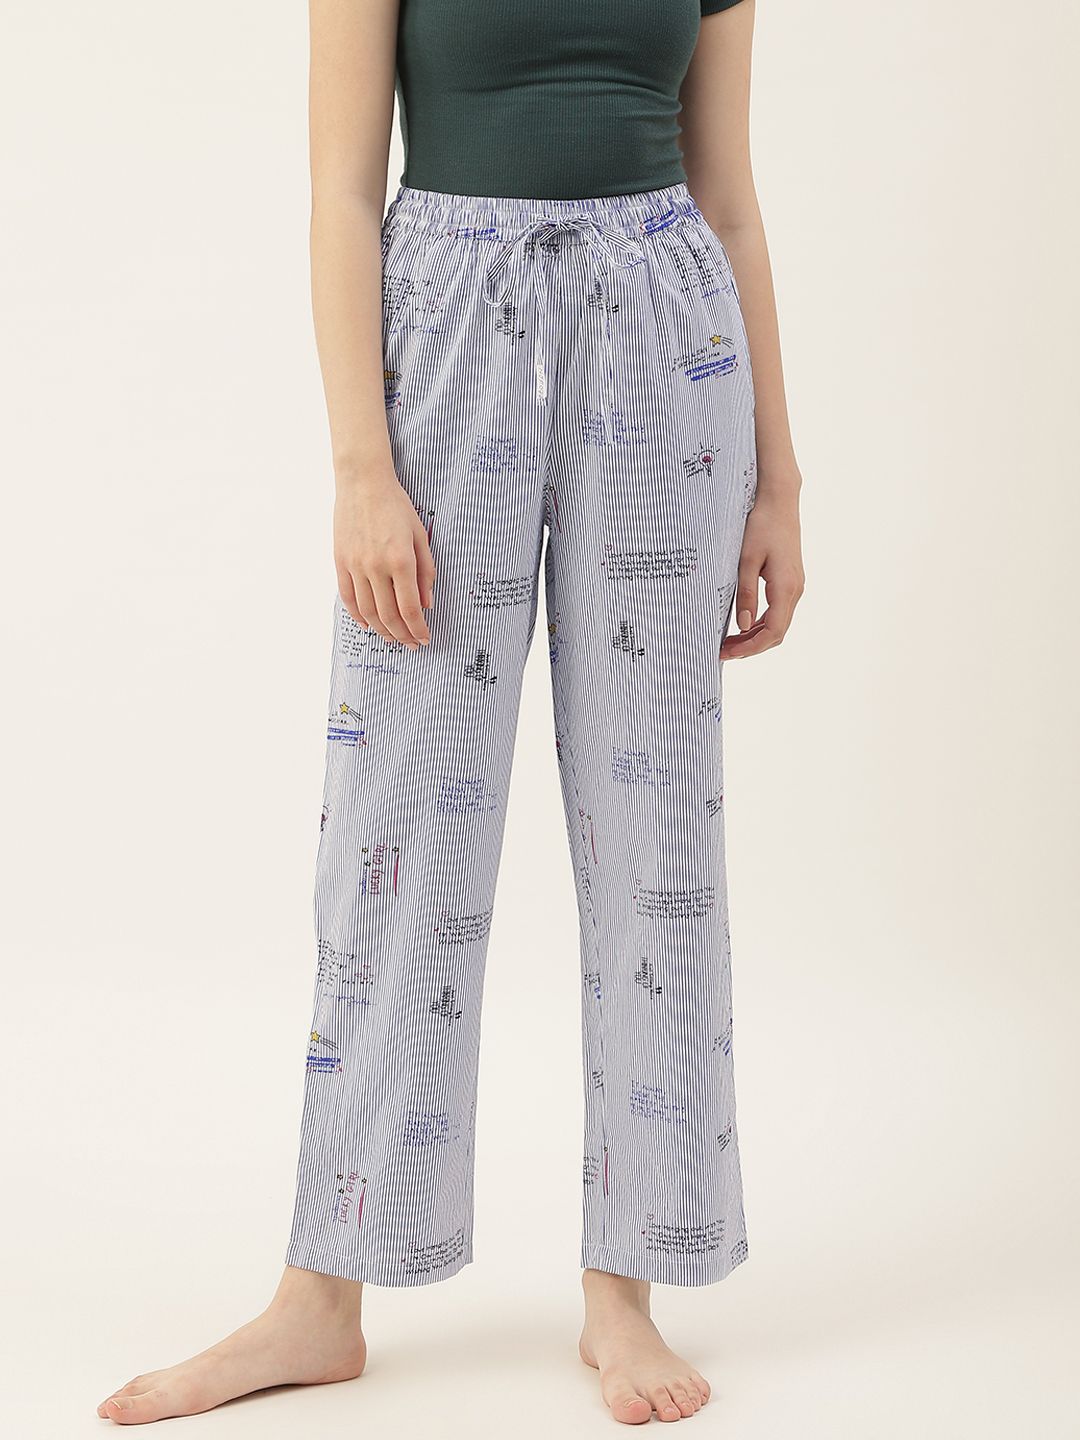 Not Just Pyjamas Women Blue & White Printed Cotton Lounge Pants Price in India